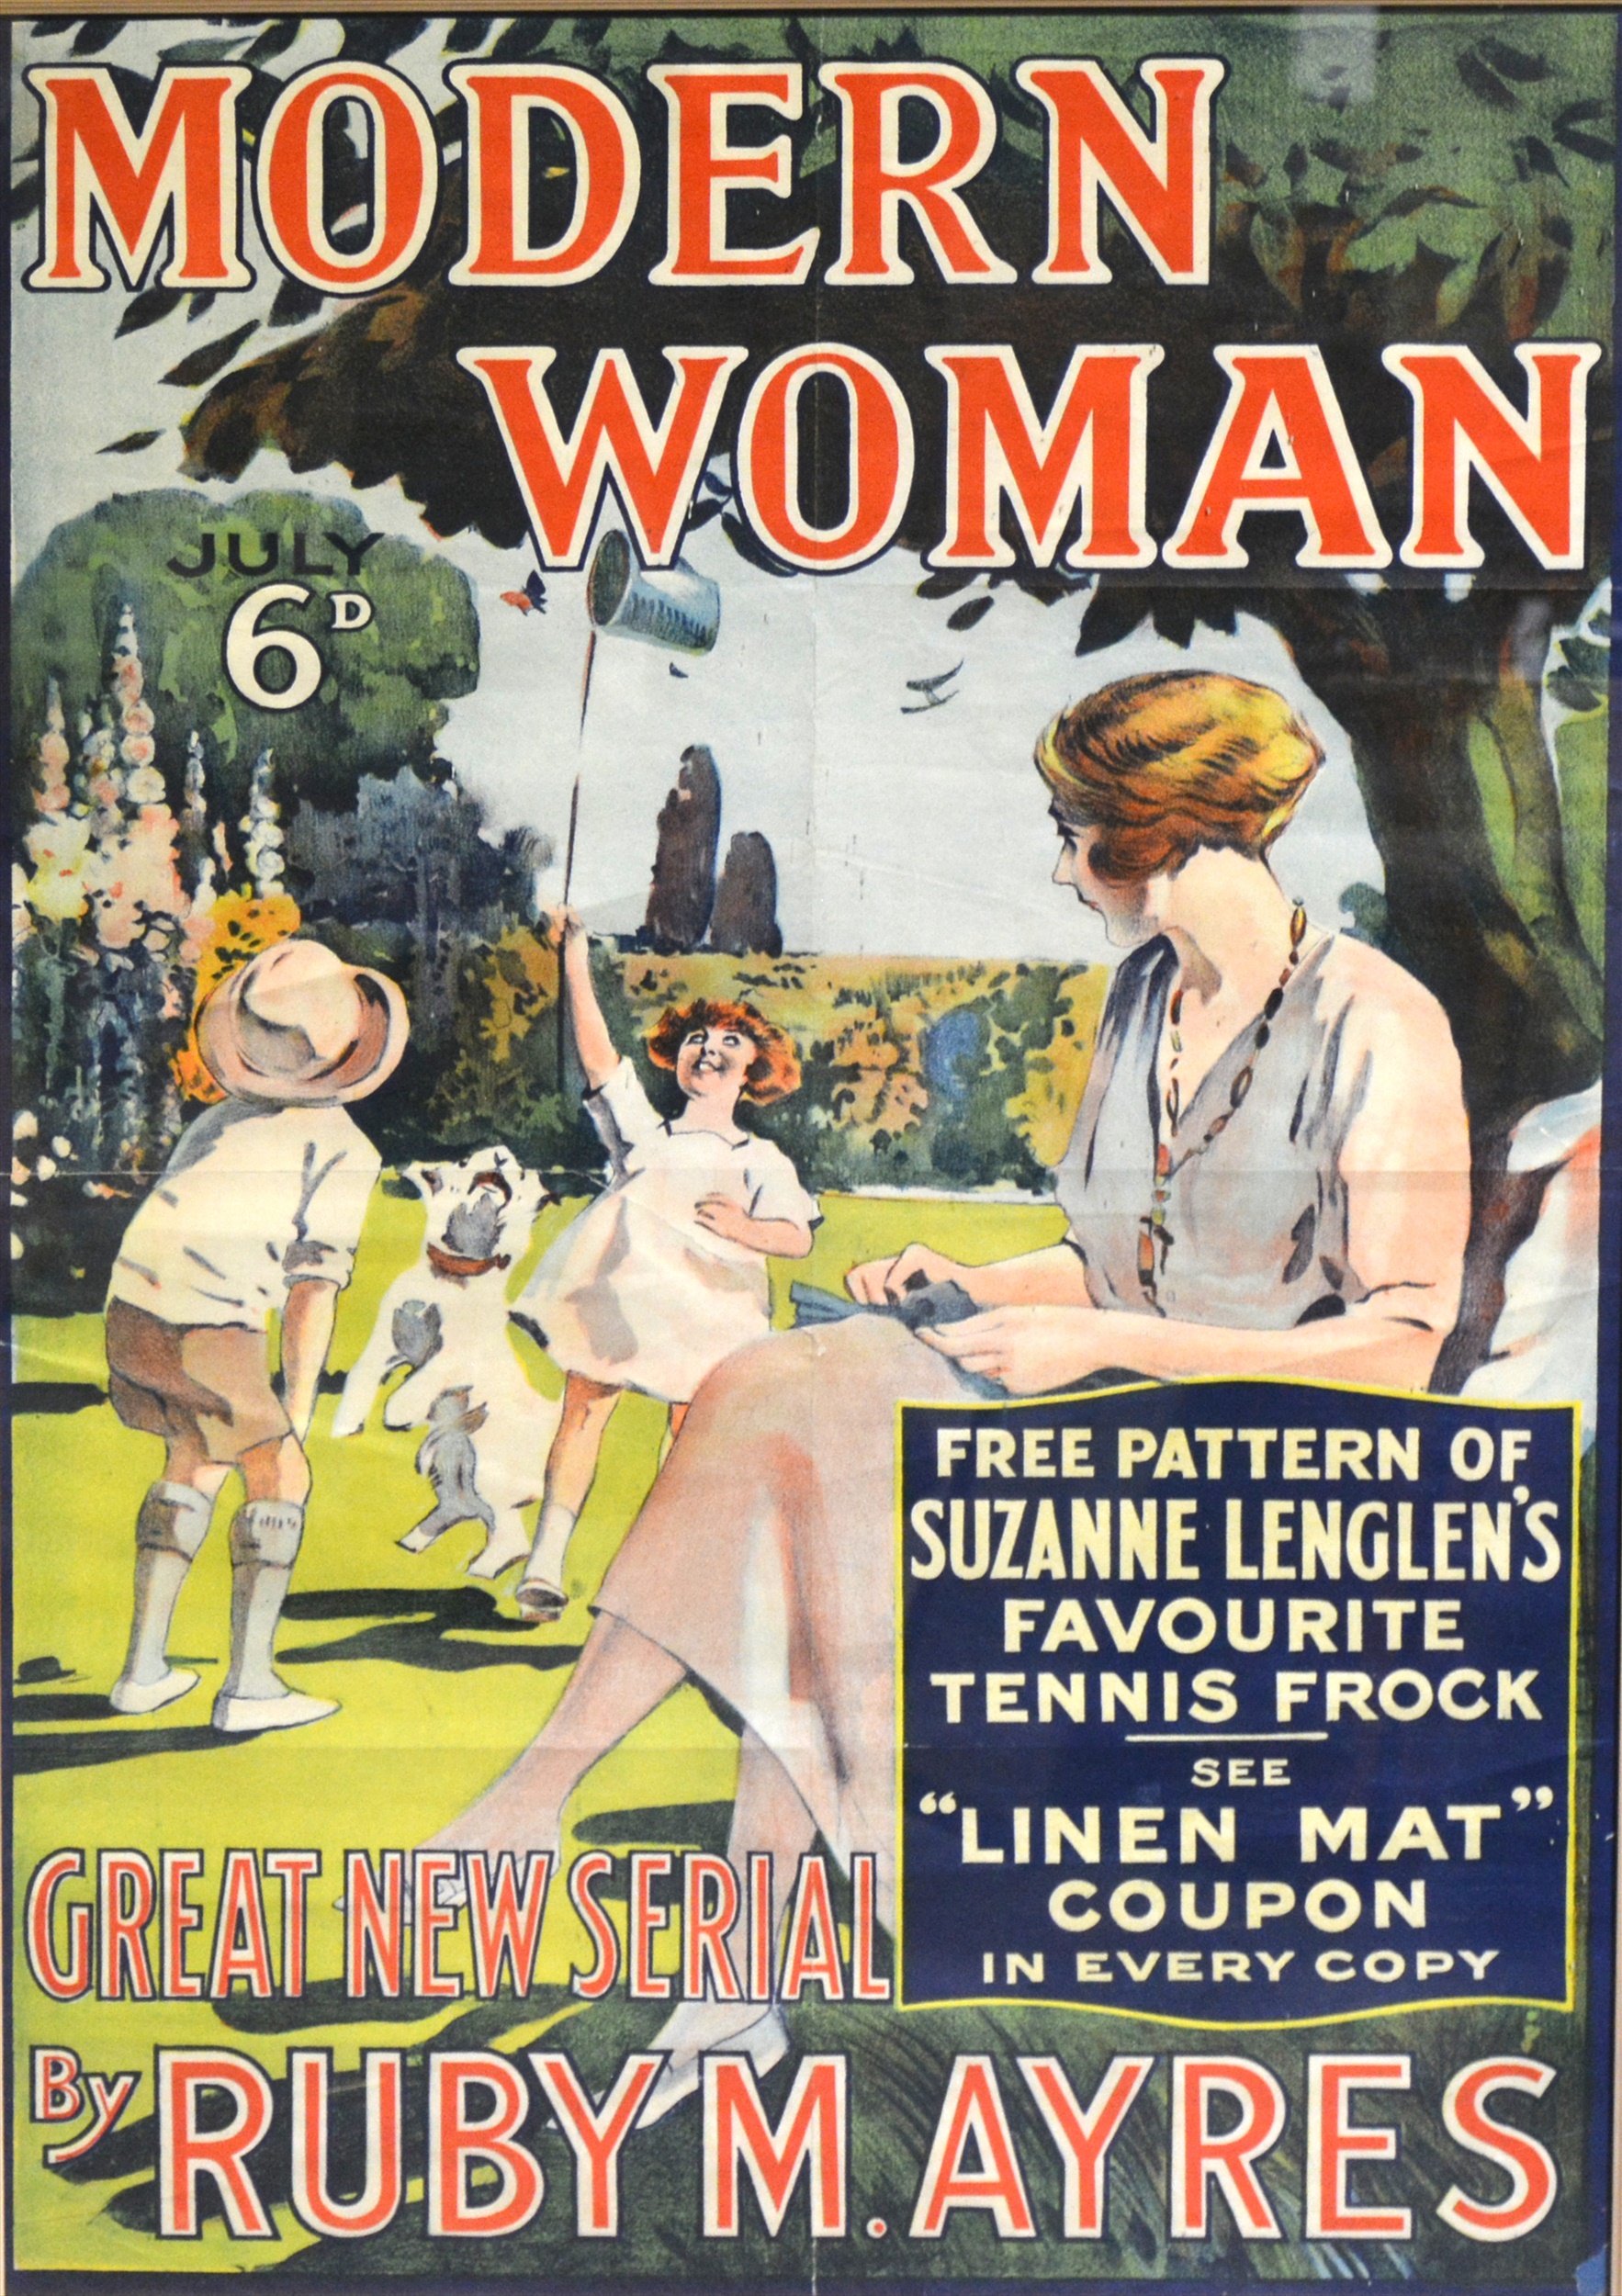 Framed poster, 'Modern Woman' magazine artwork - Image 2 of 2